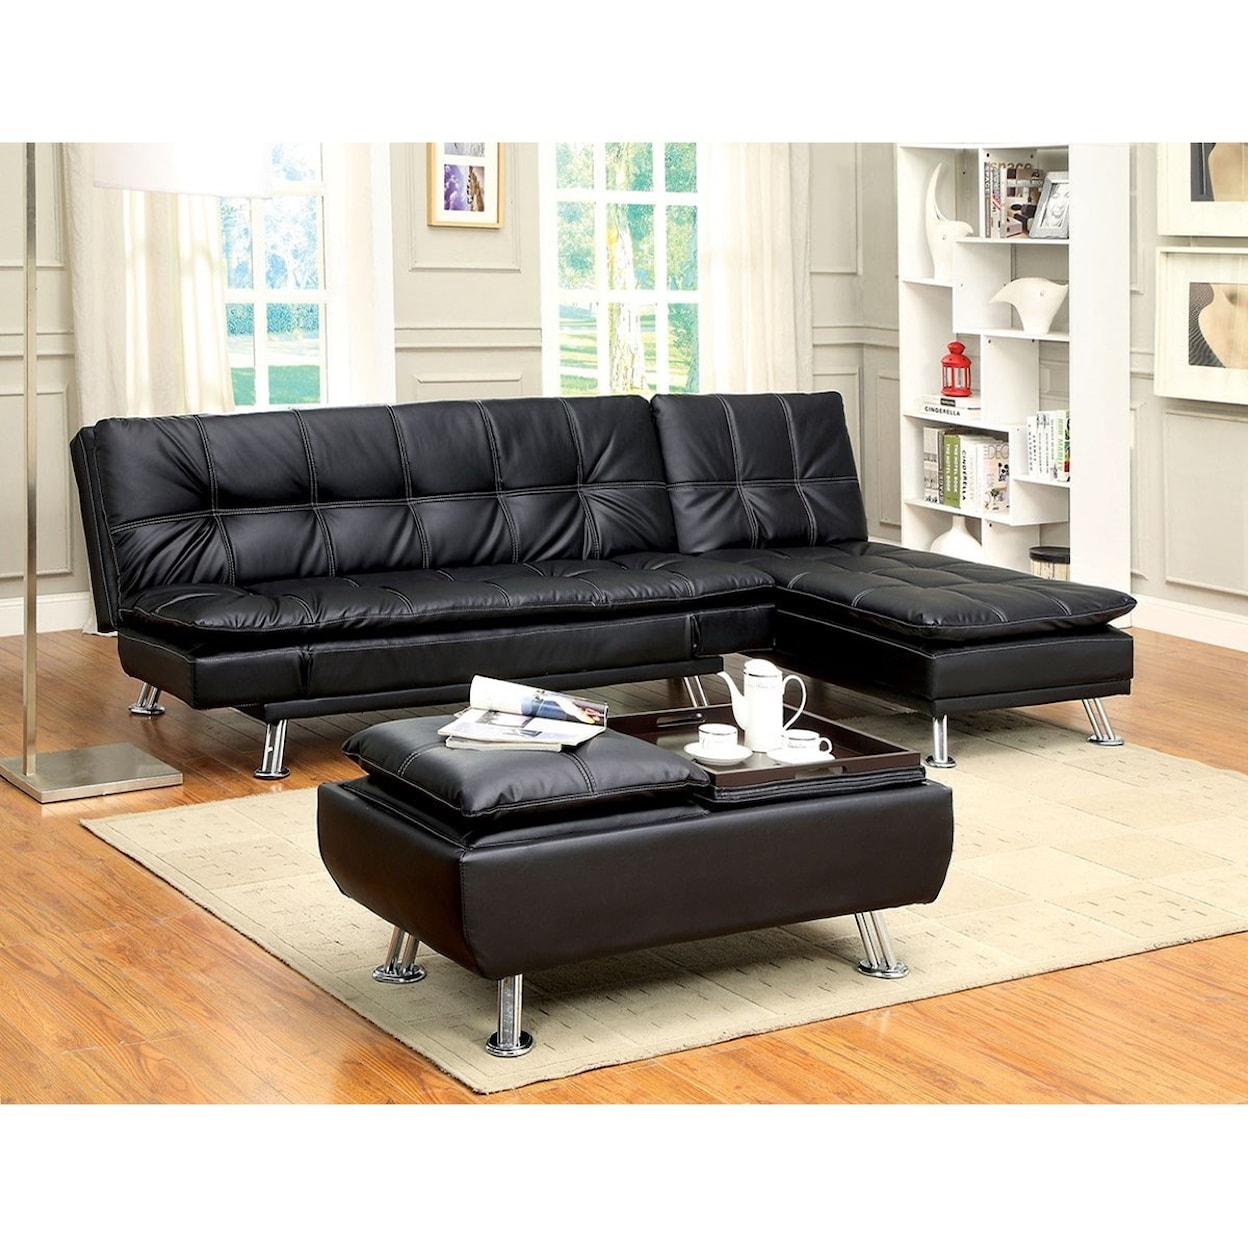 Furniture of America Hauser II Futon Sofa